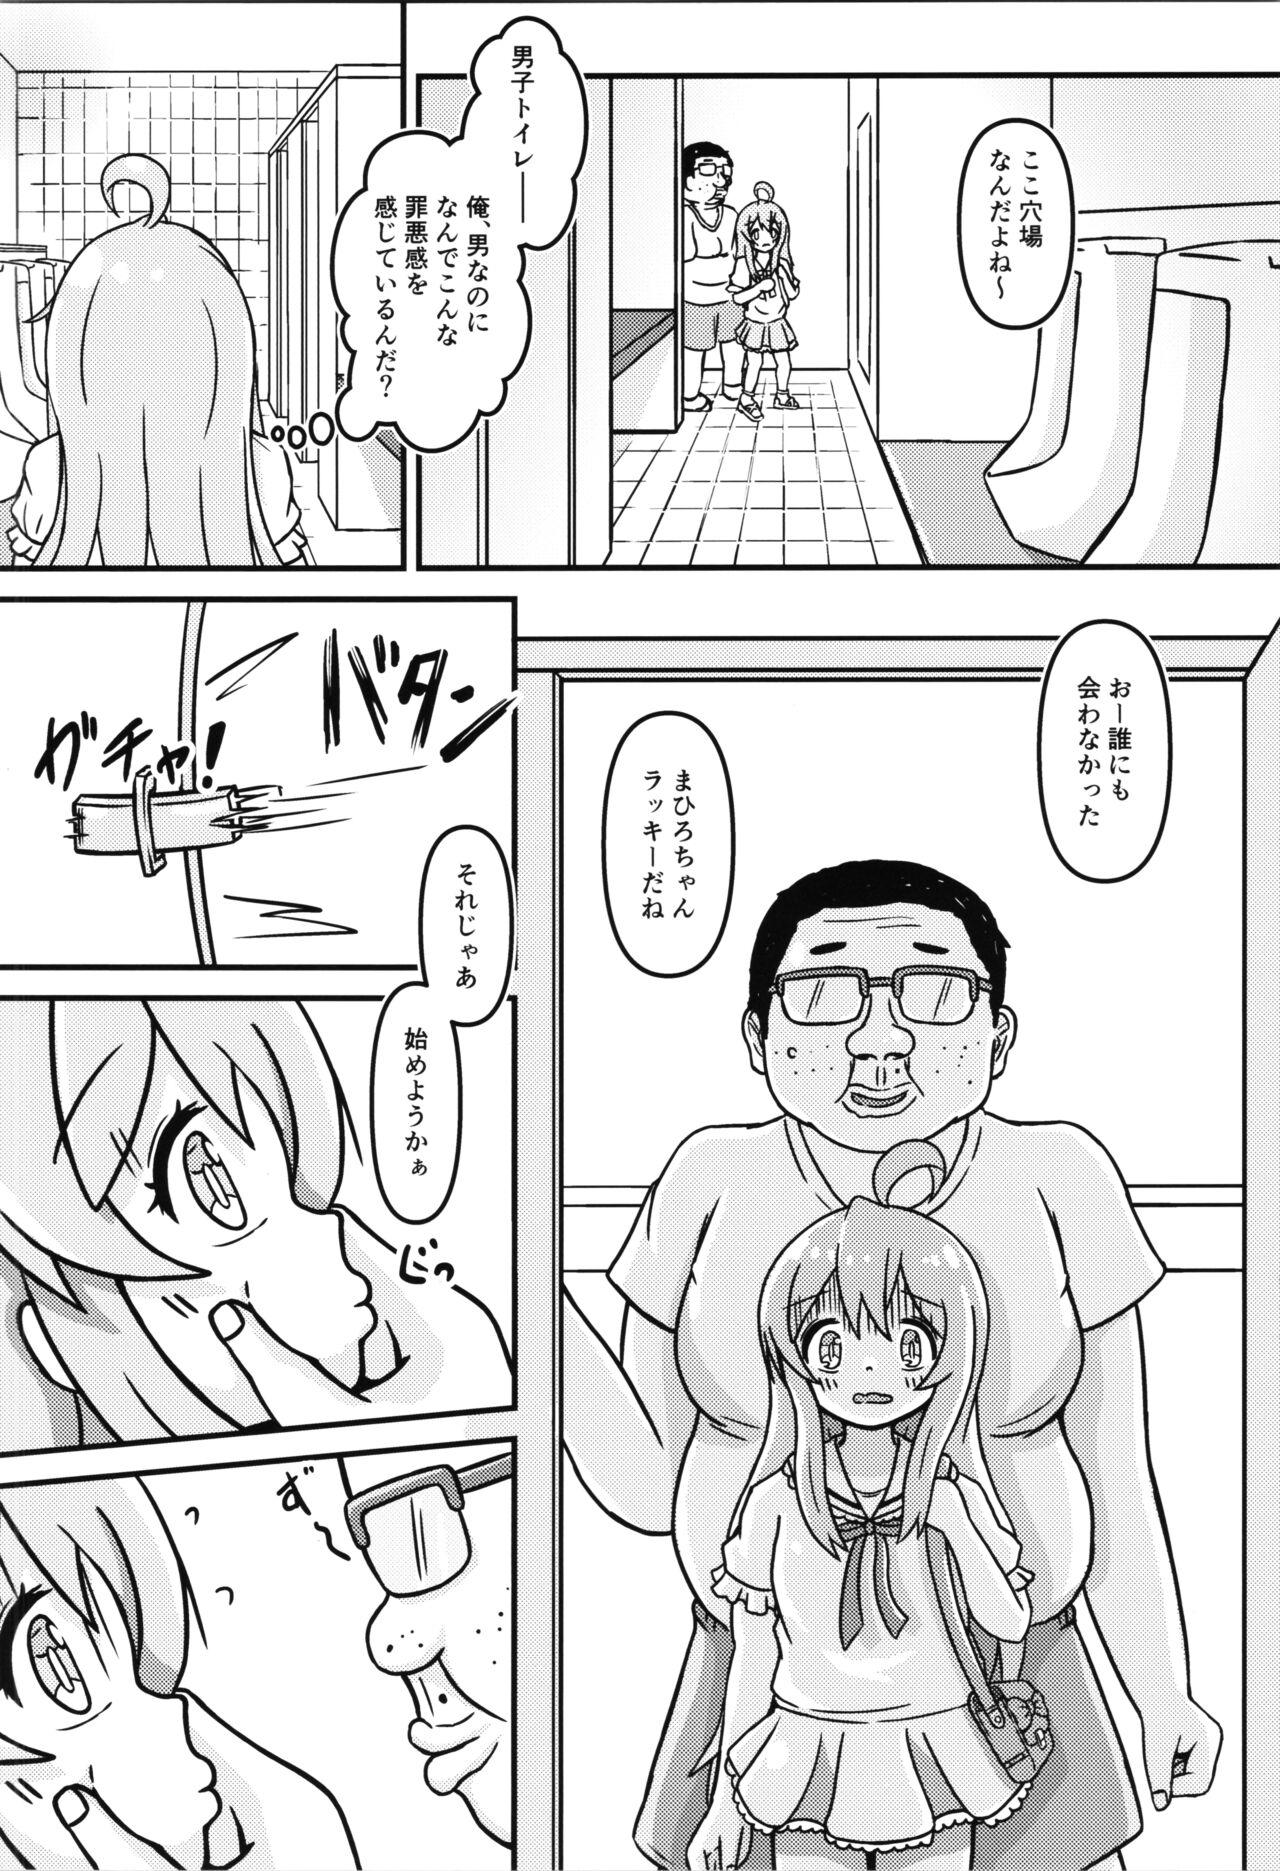 Mahiro-chan's bouncy ××× experience 13